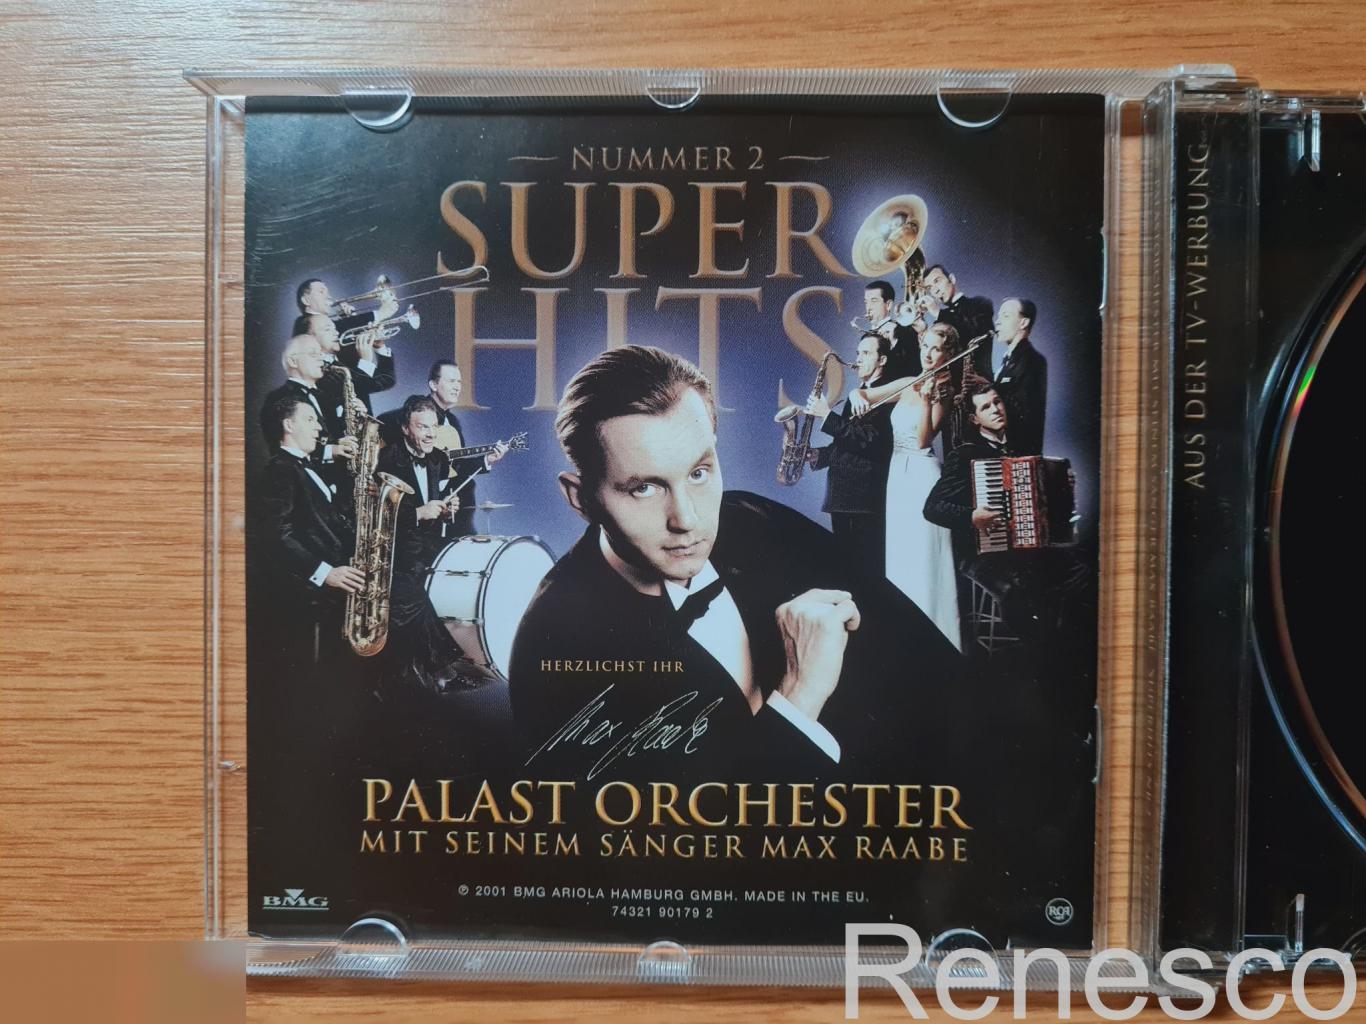 Palast Orchester Mit Seinem Sanger Max Raabe ?– Super Hits Nummer 2 (Europe) (20 3